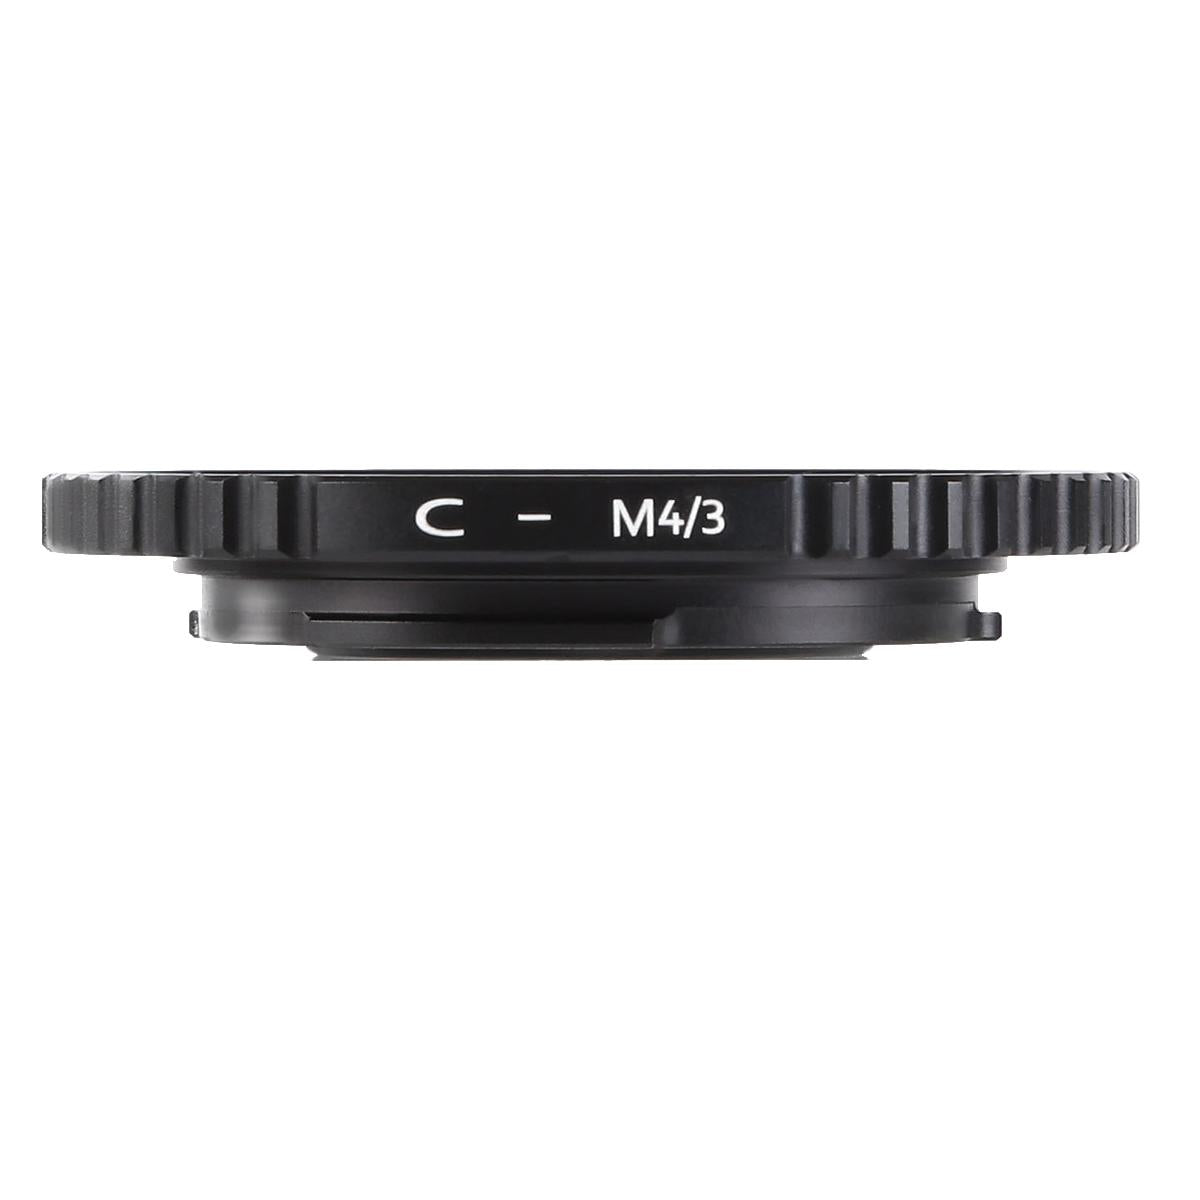 Image of K&F Concept C Mount Lenses to M43 MFT Mount Camera Adapter